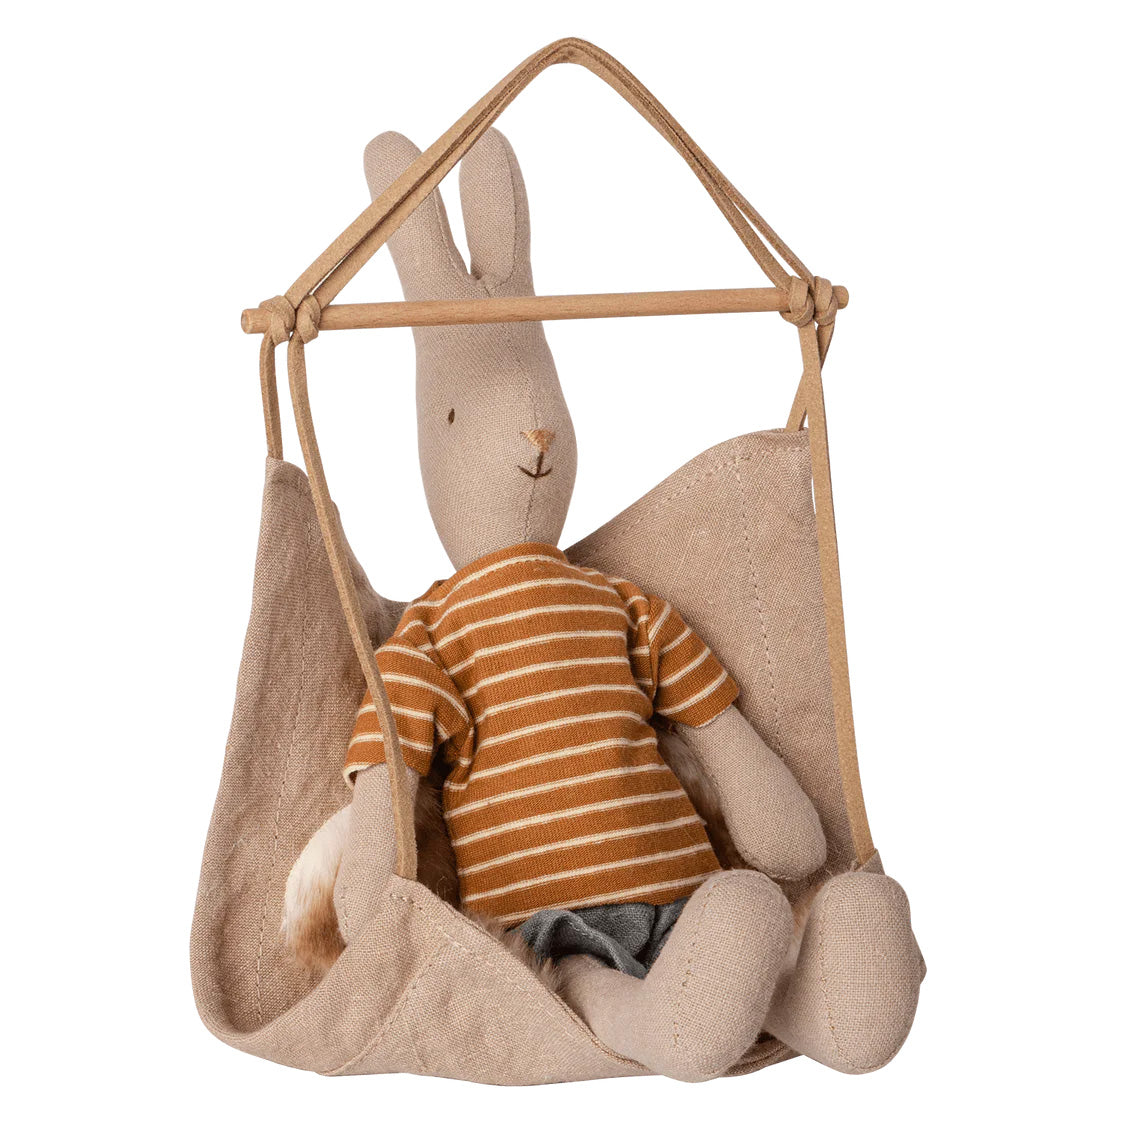 Miniature hanging chair, Rabbit Dollhouse